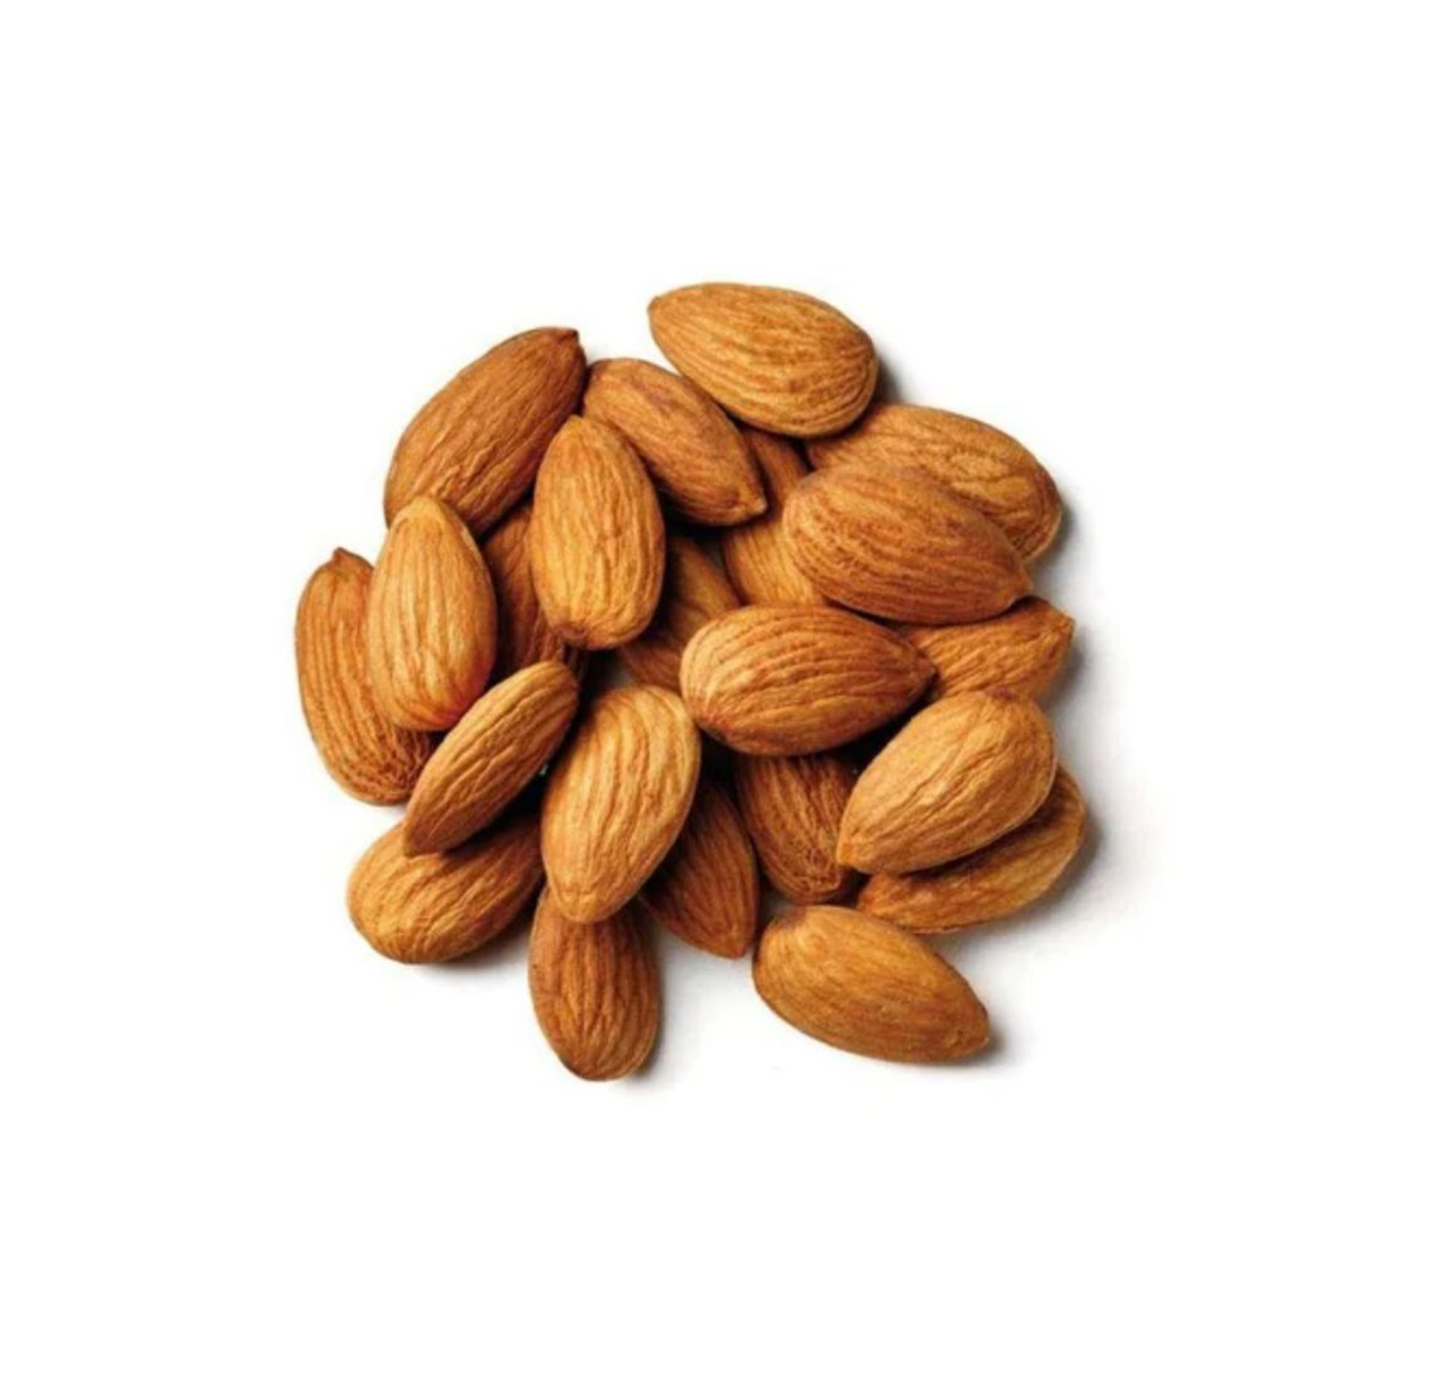 Kashmiri Almonds (Badam) Nature's Oily Delight